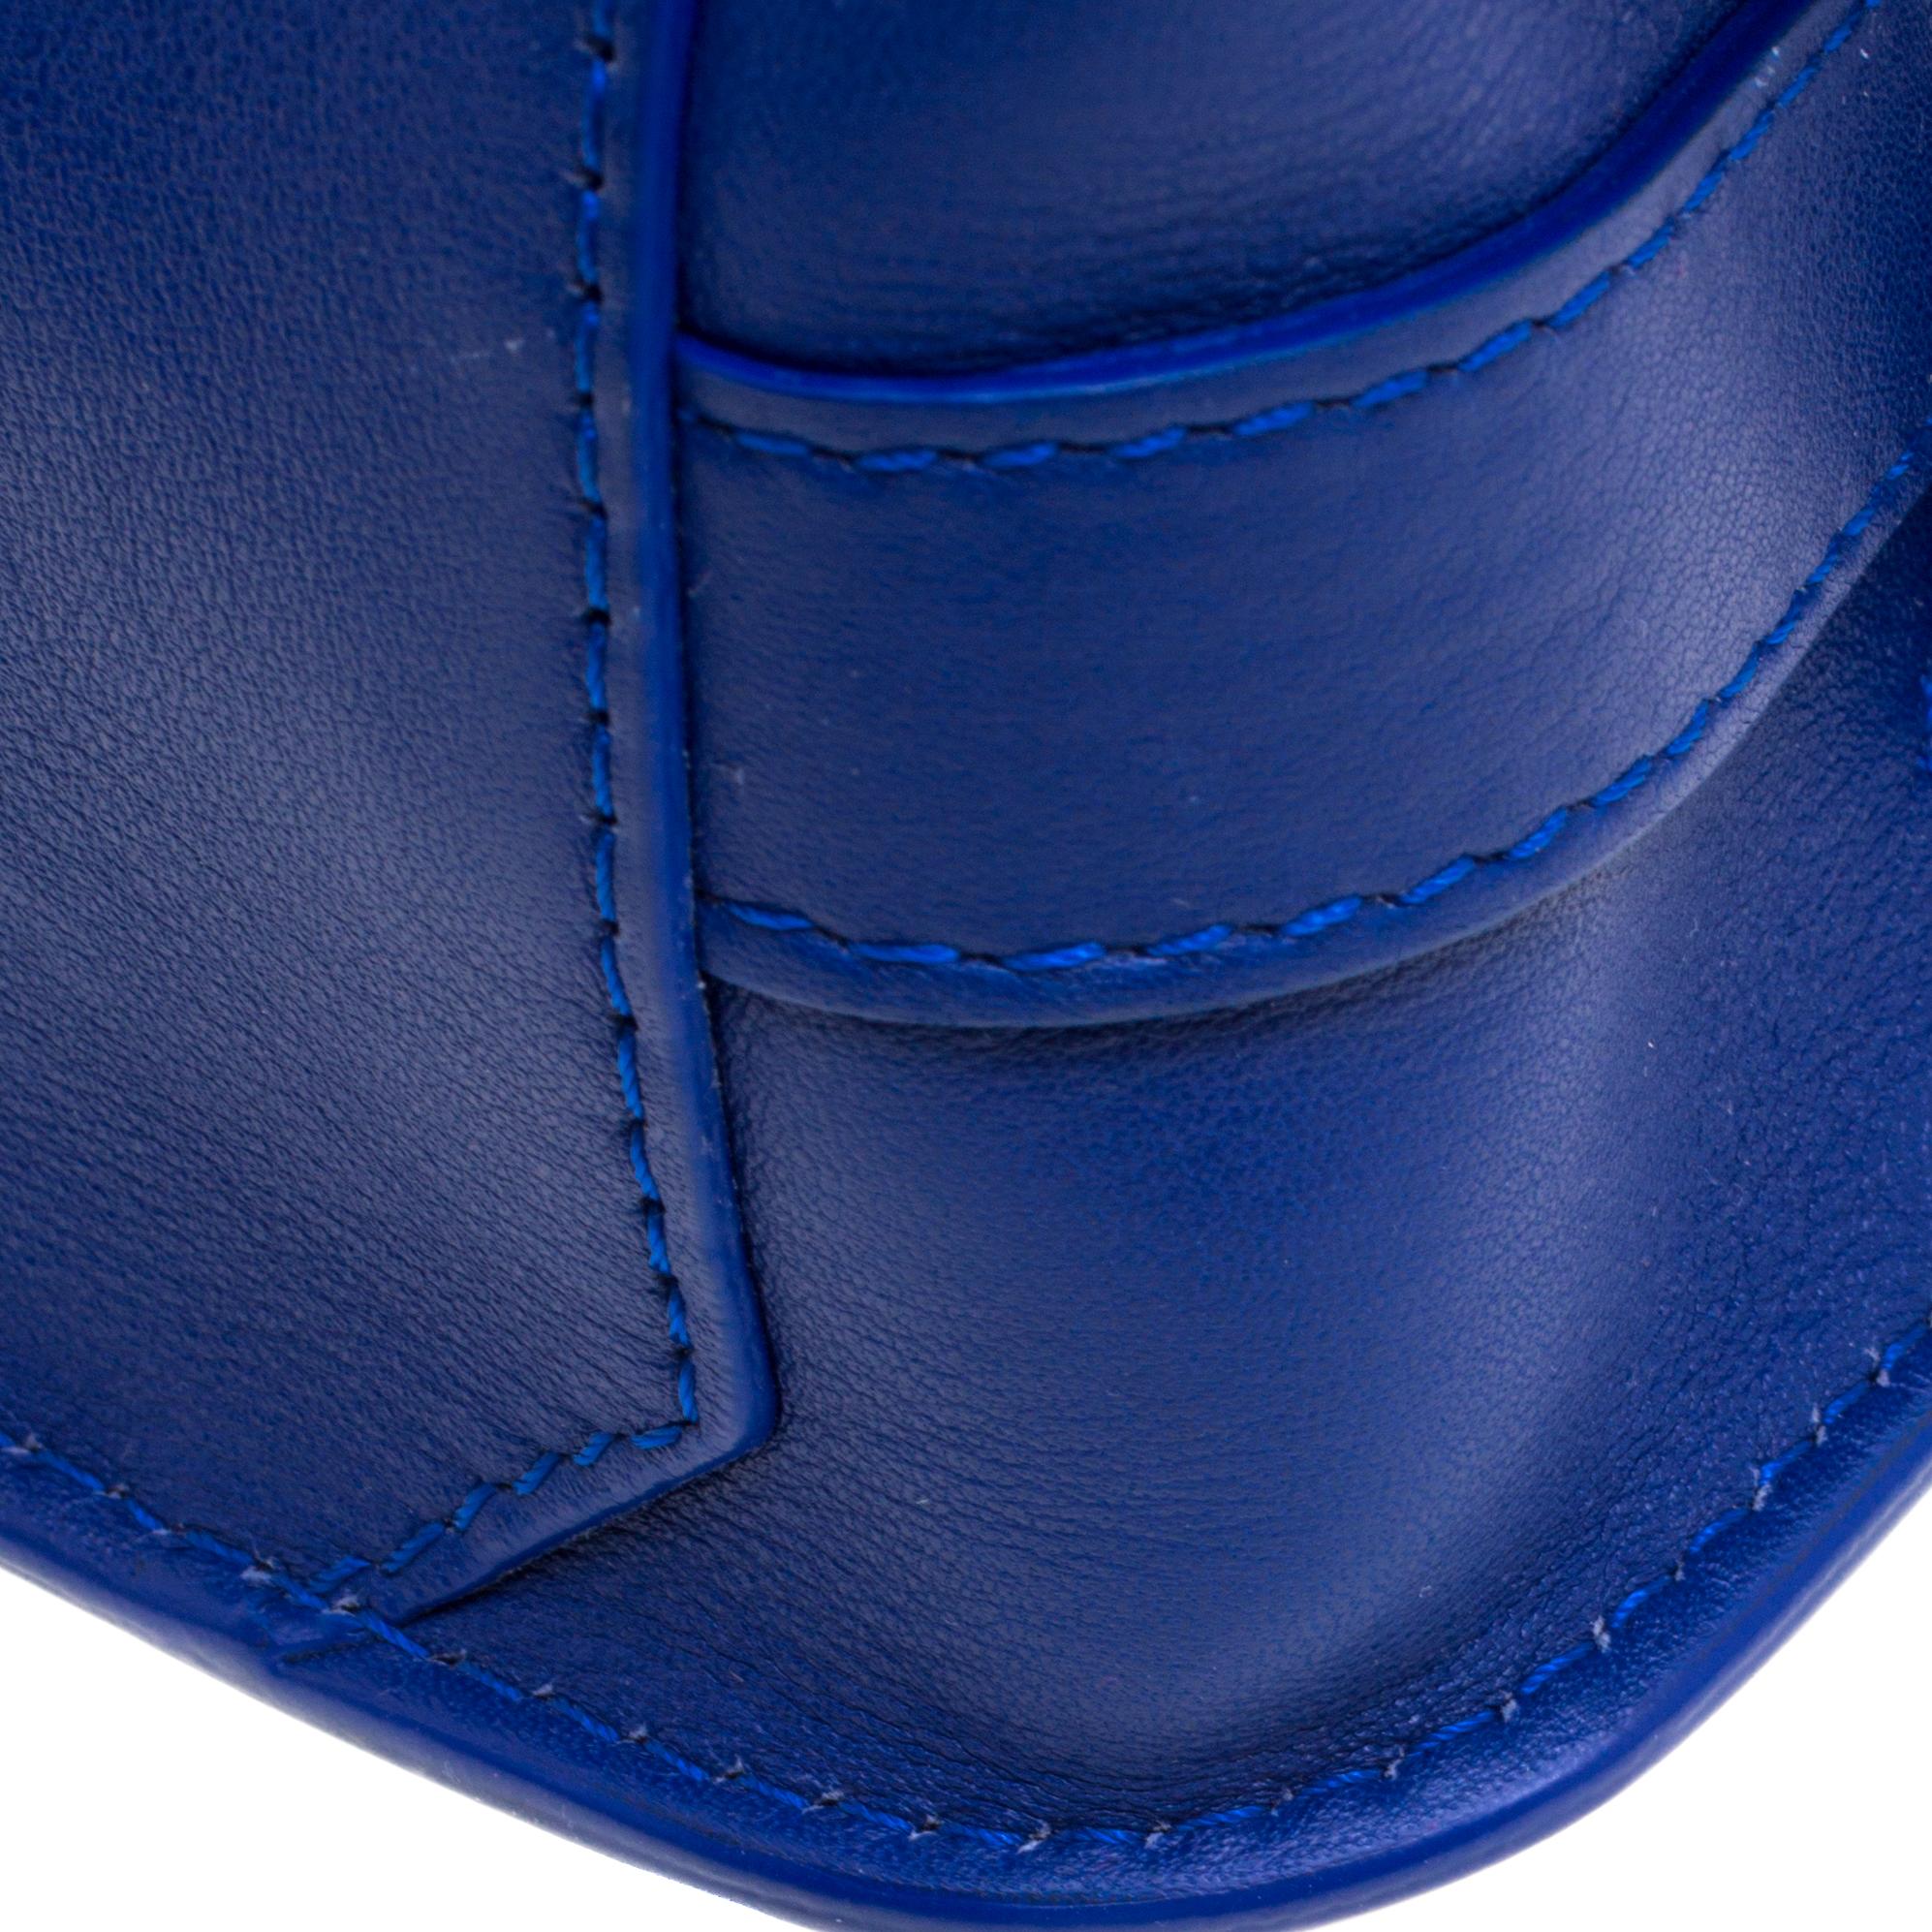 Proenza Schouler Blue Leather Mini Classic PS11 Shoulder Bag 7